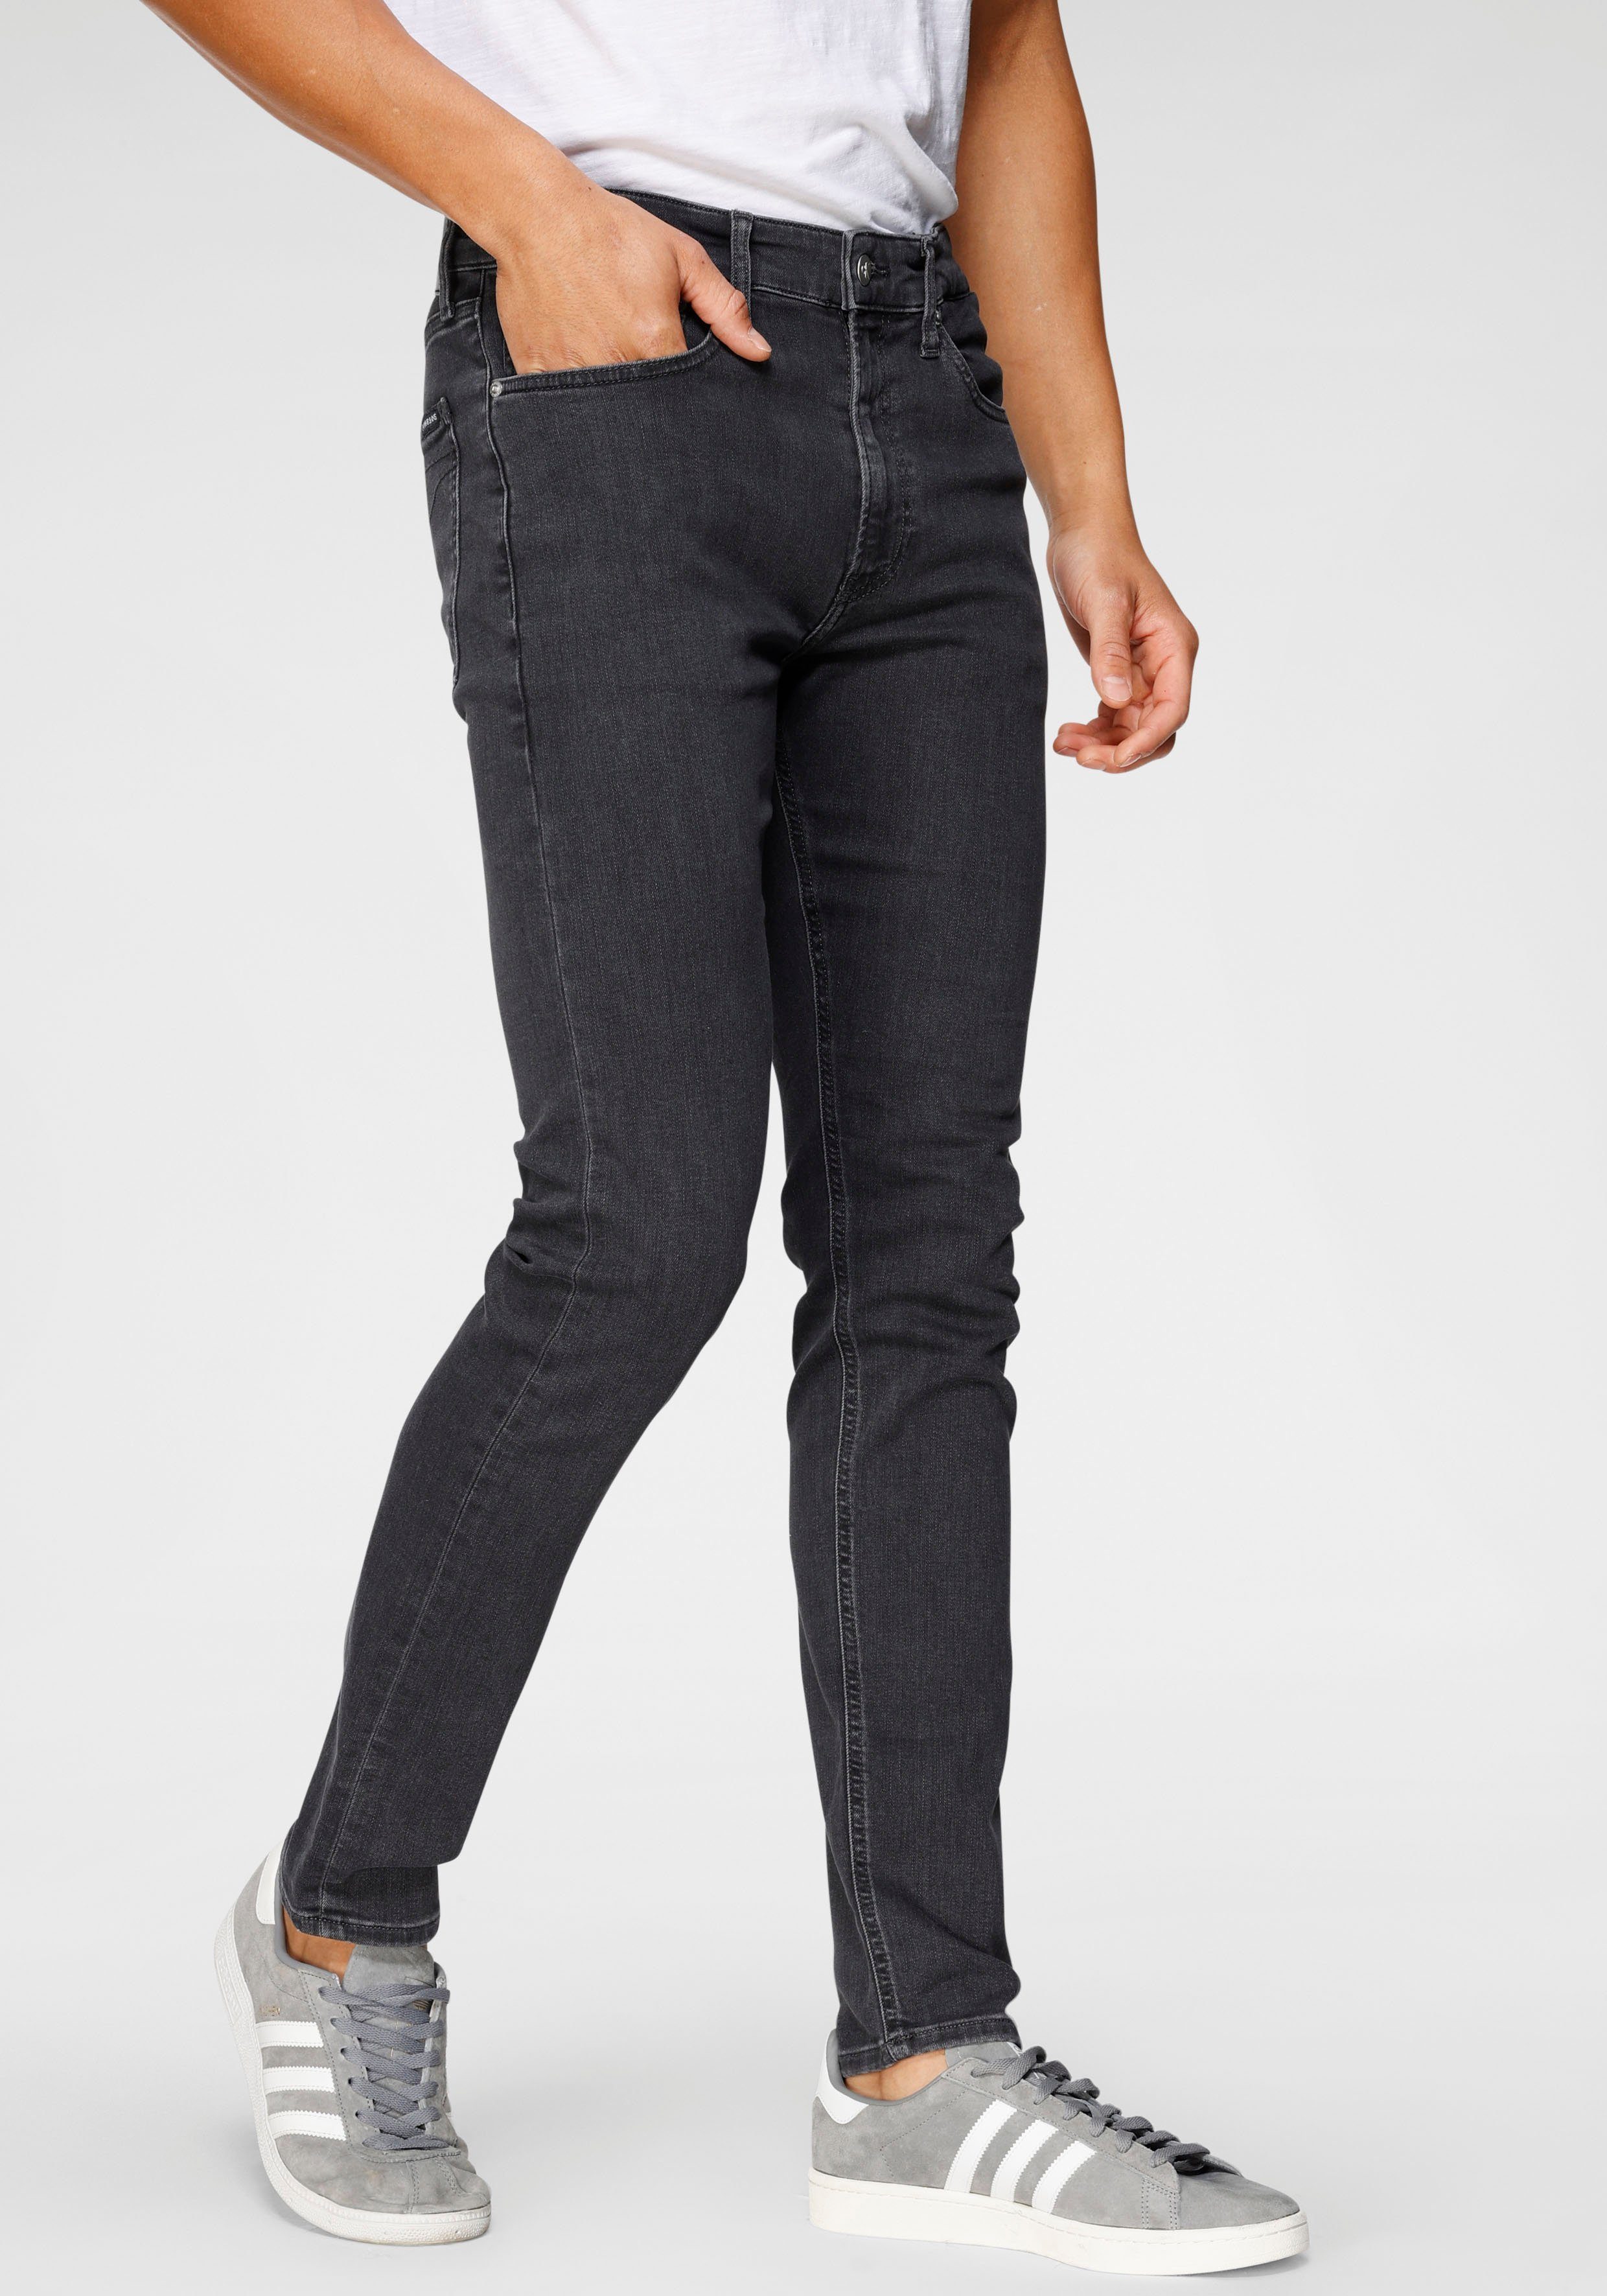 Calvin Klein jeans CKJ 016 SKINNY modieuze wassing? Bestel nu |